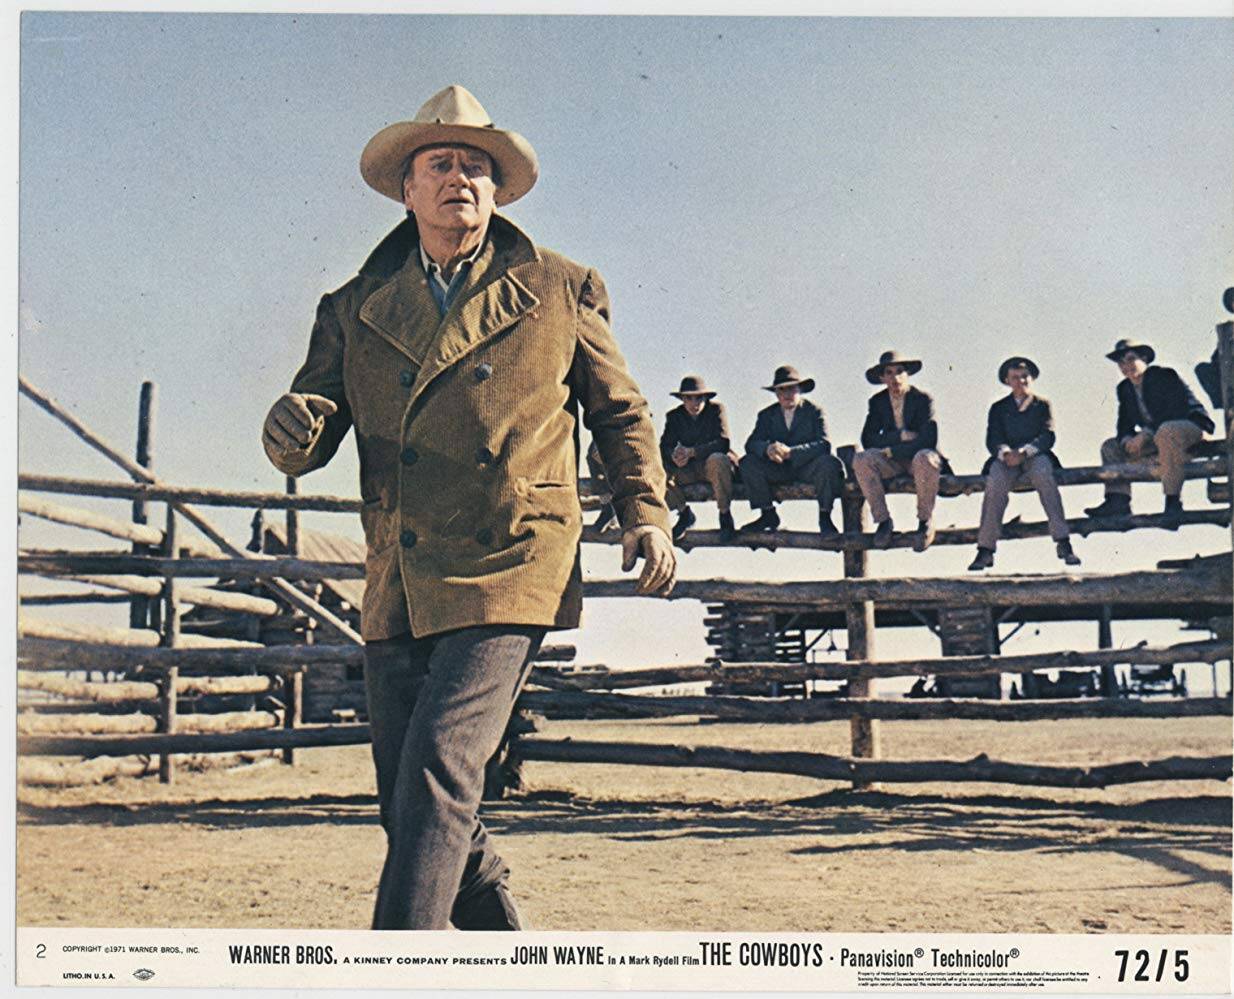 John Wayne The Cowboys